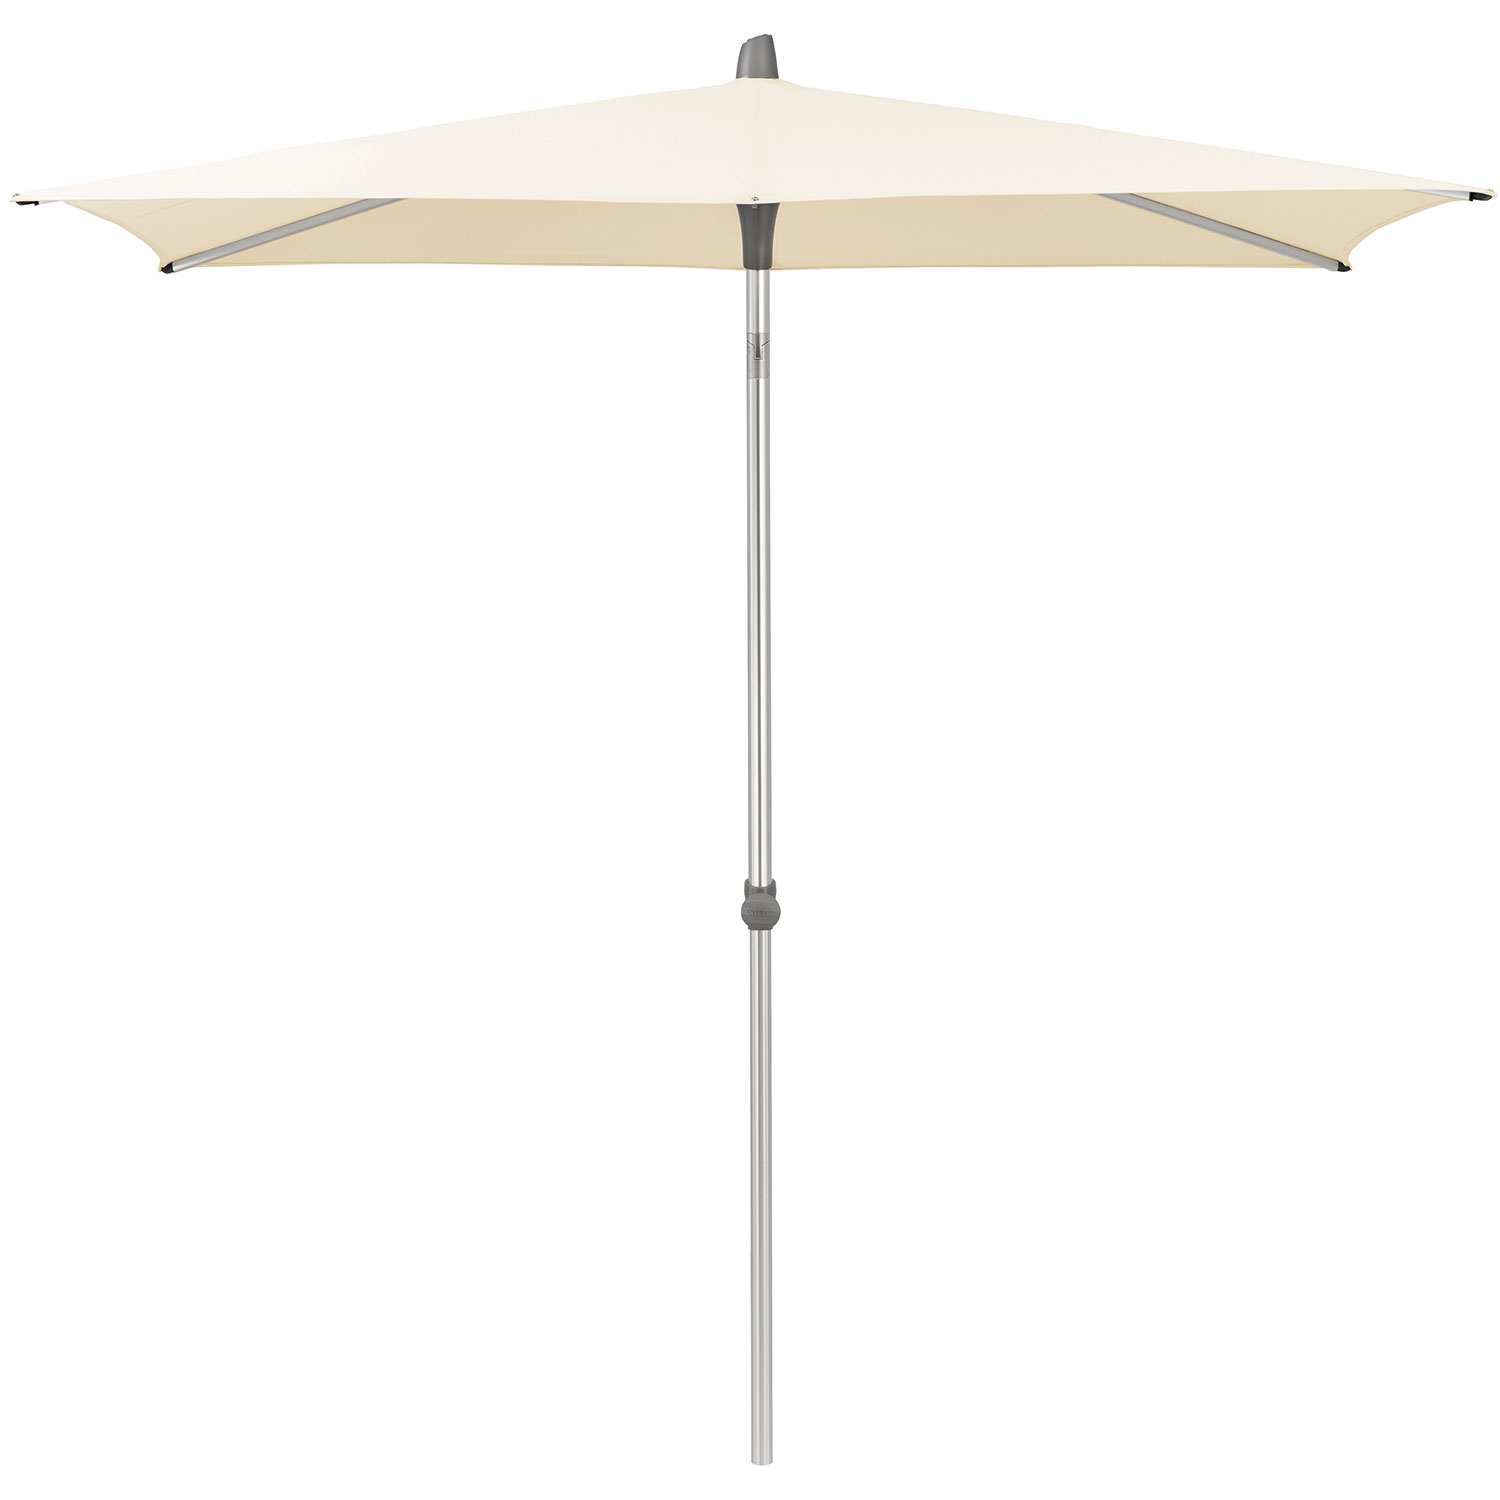 Glatz Alu-smart parasoll 210×150 cm offwhite